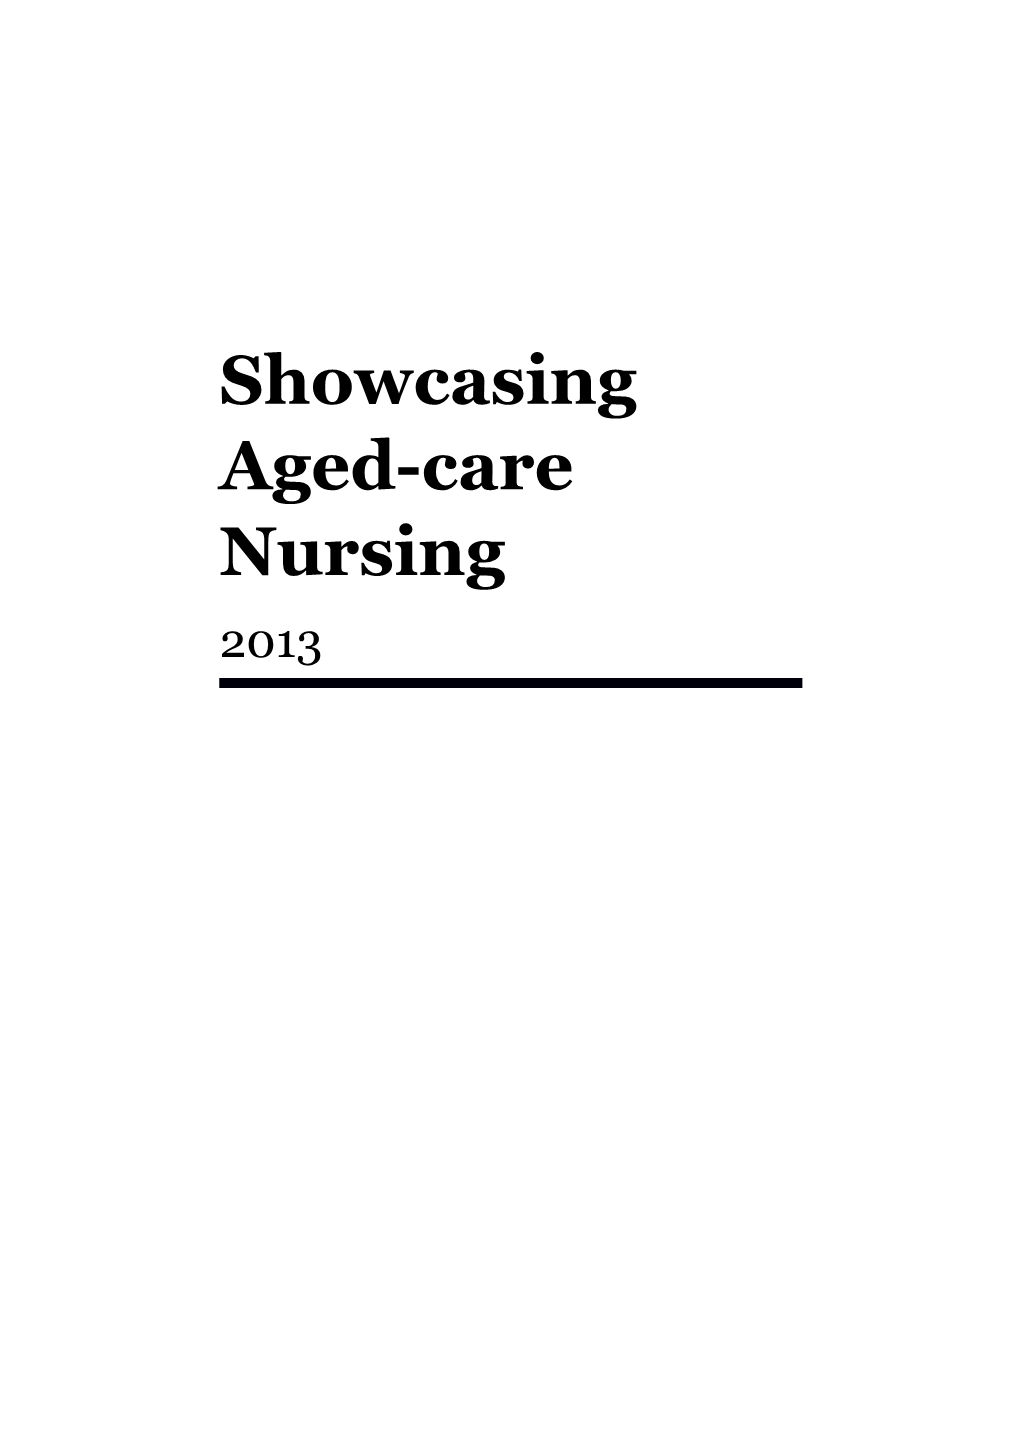 Showcasing Aged-Care Nursing